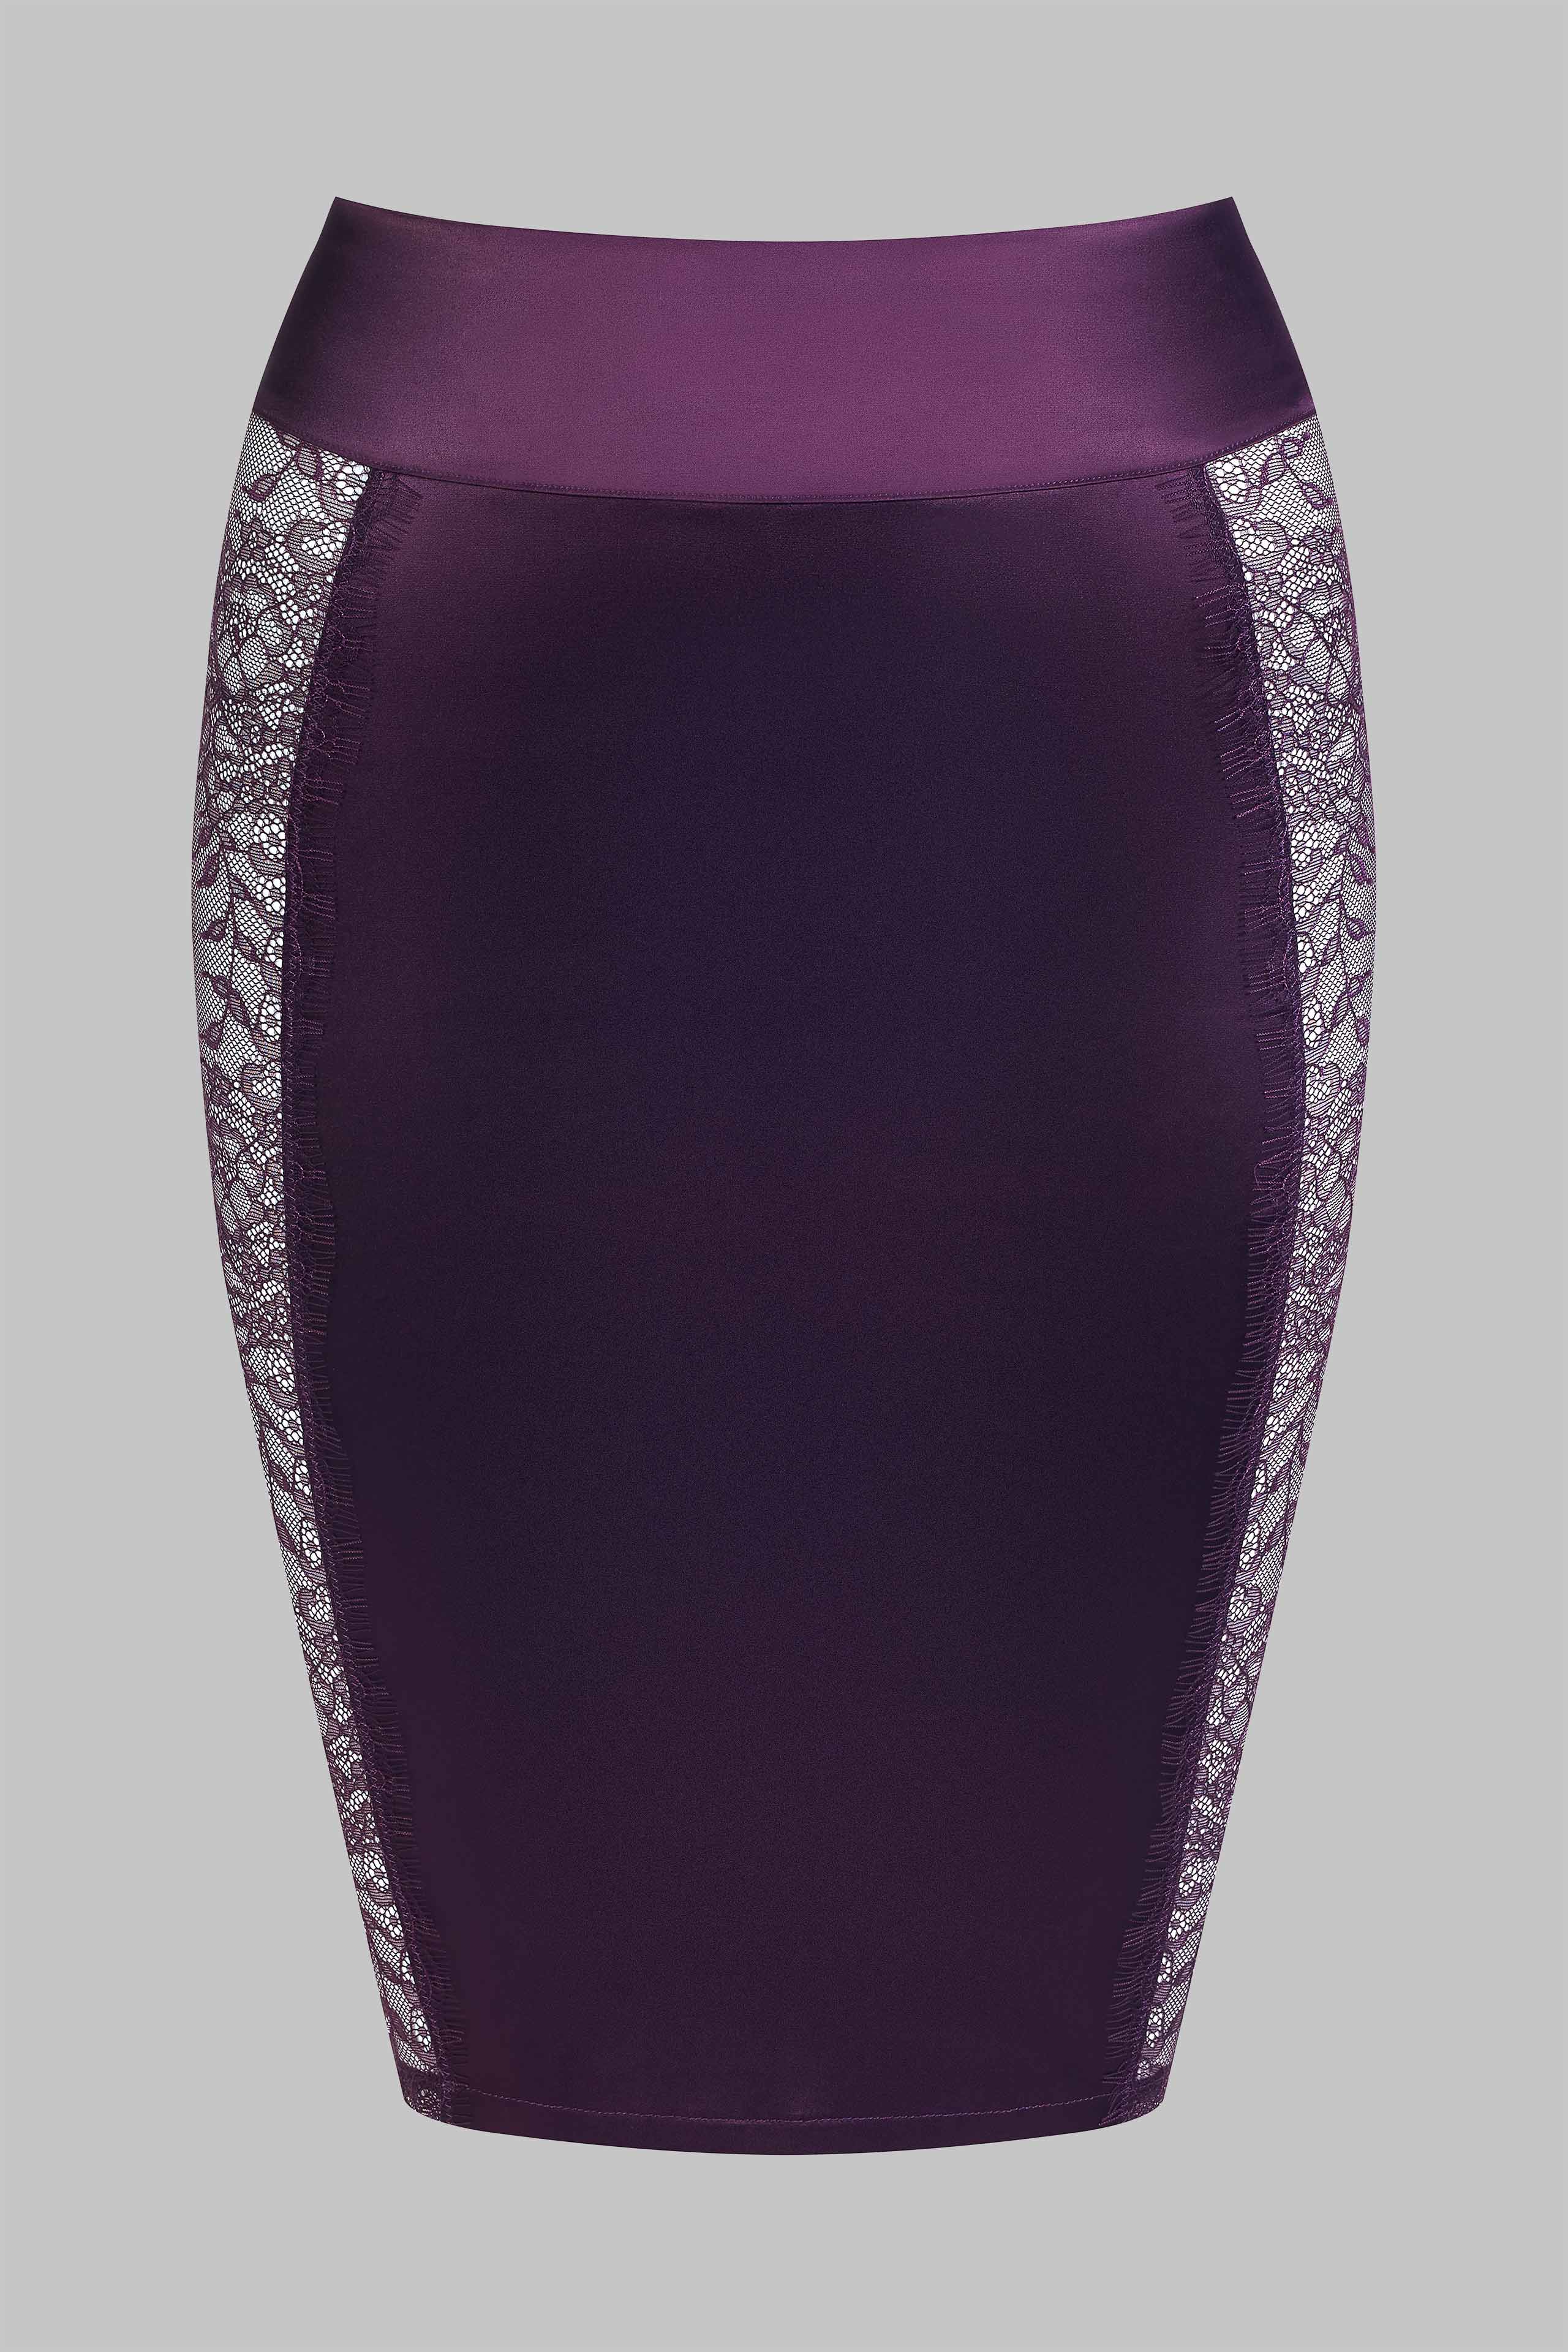 Elegant Villa Satine Triangle Bra & Lace Panel Skirt